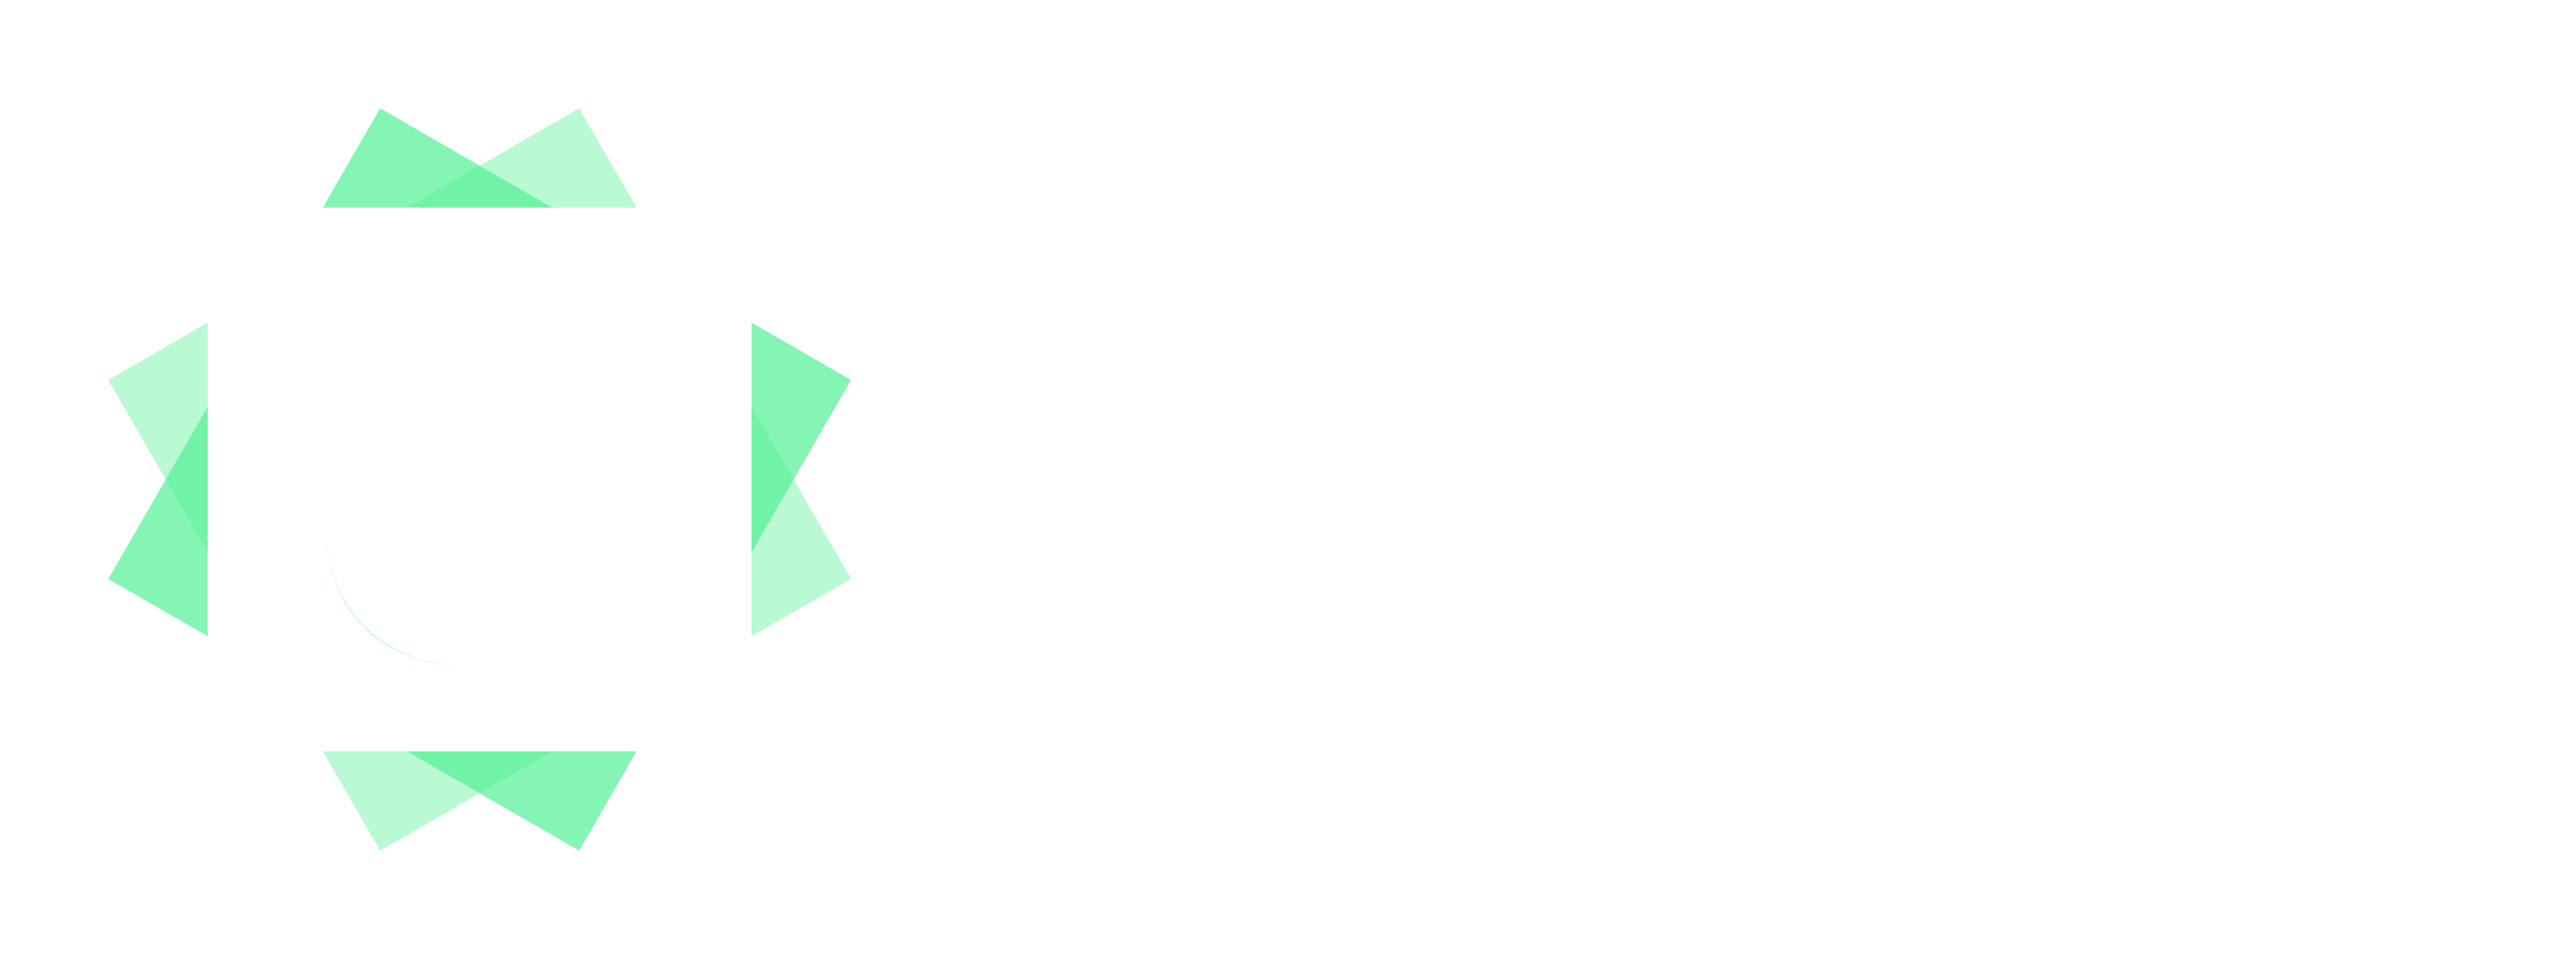 Large Broadband Provider of the Year Winner 2023